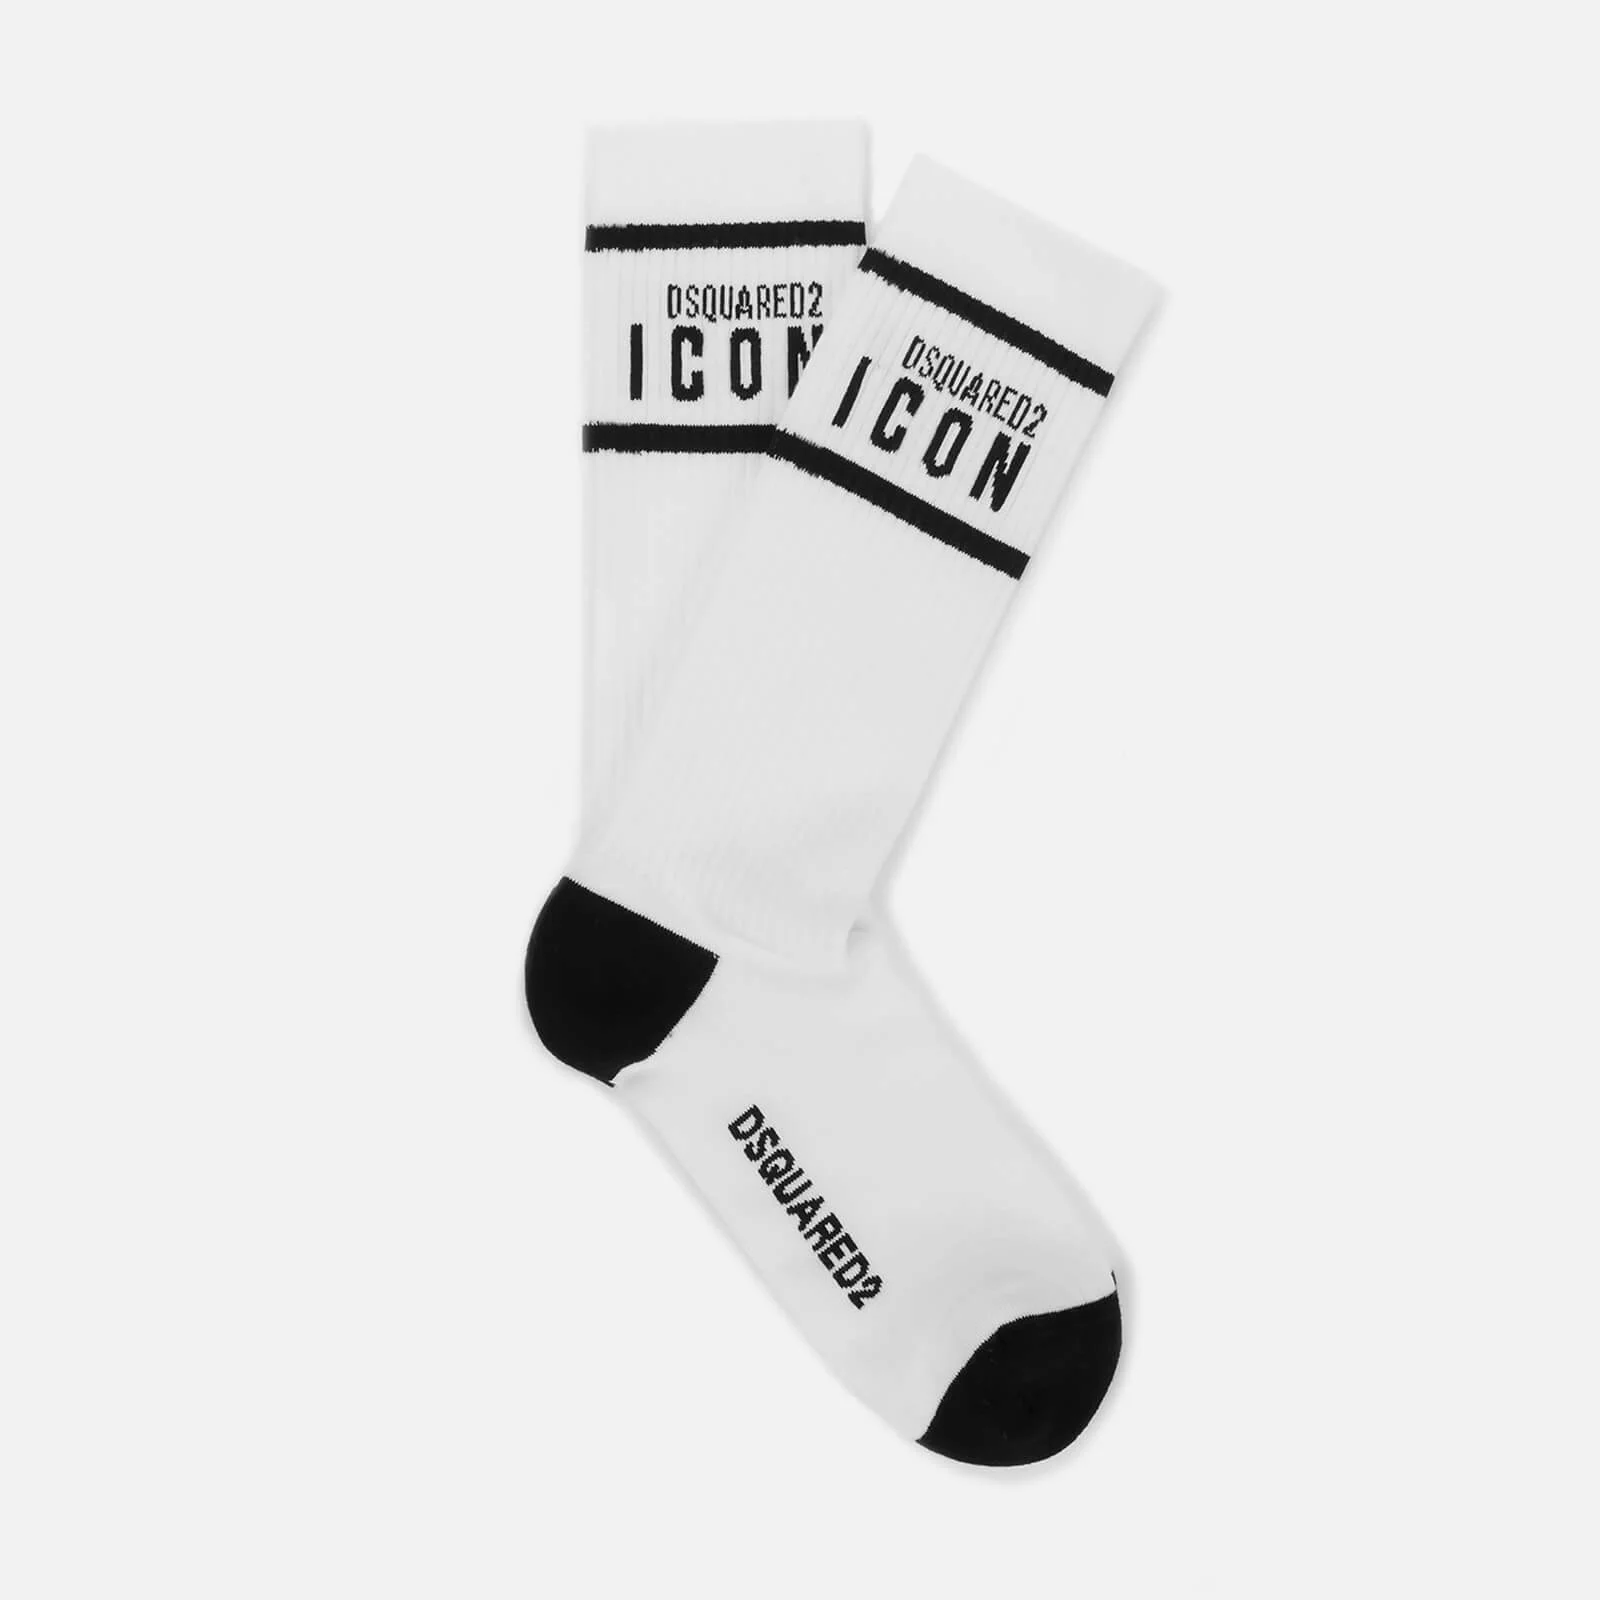 Dsquared2 Men's Icon Socks - White/Black Image 1